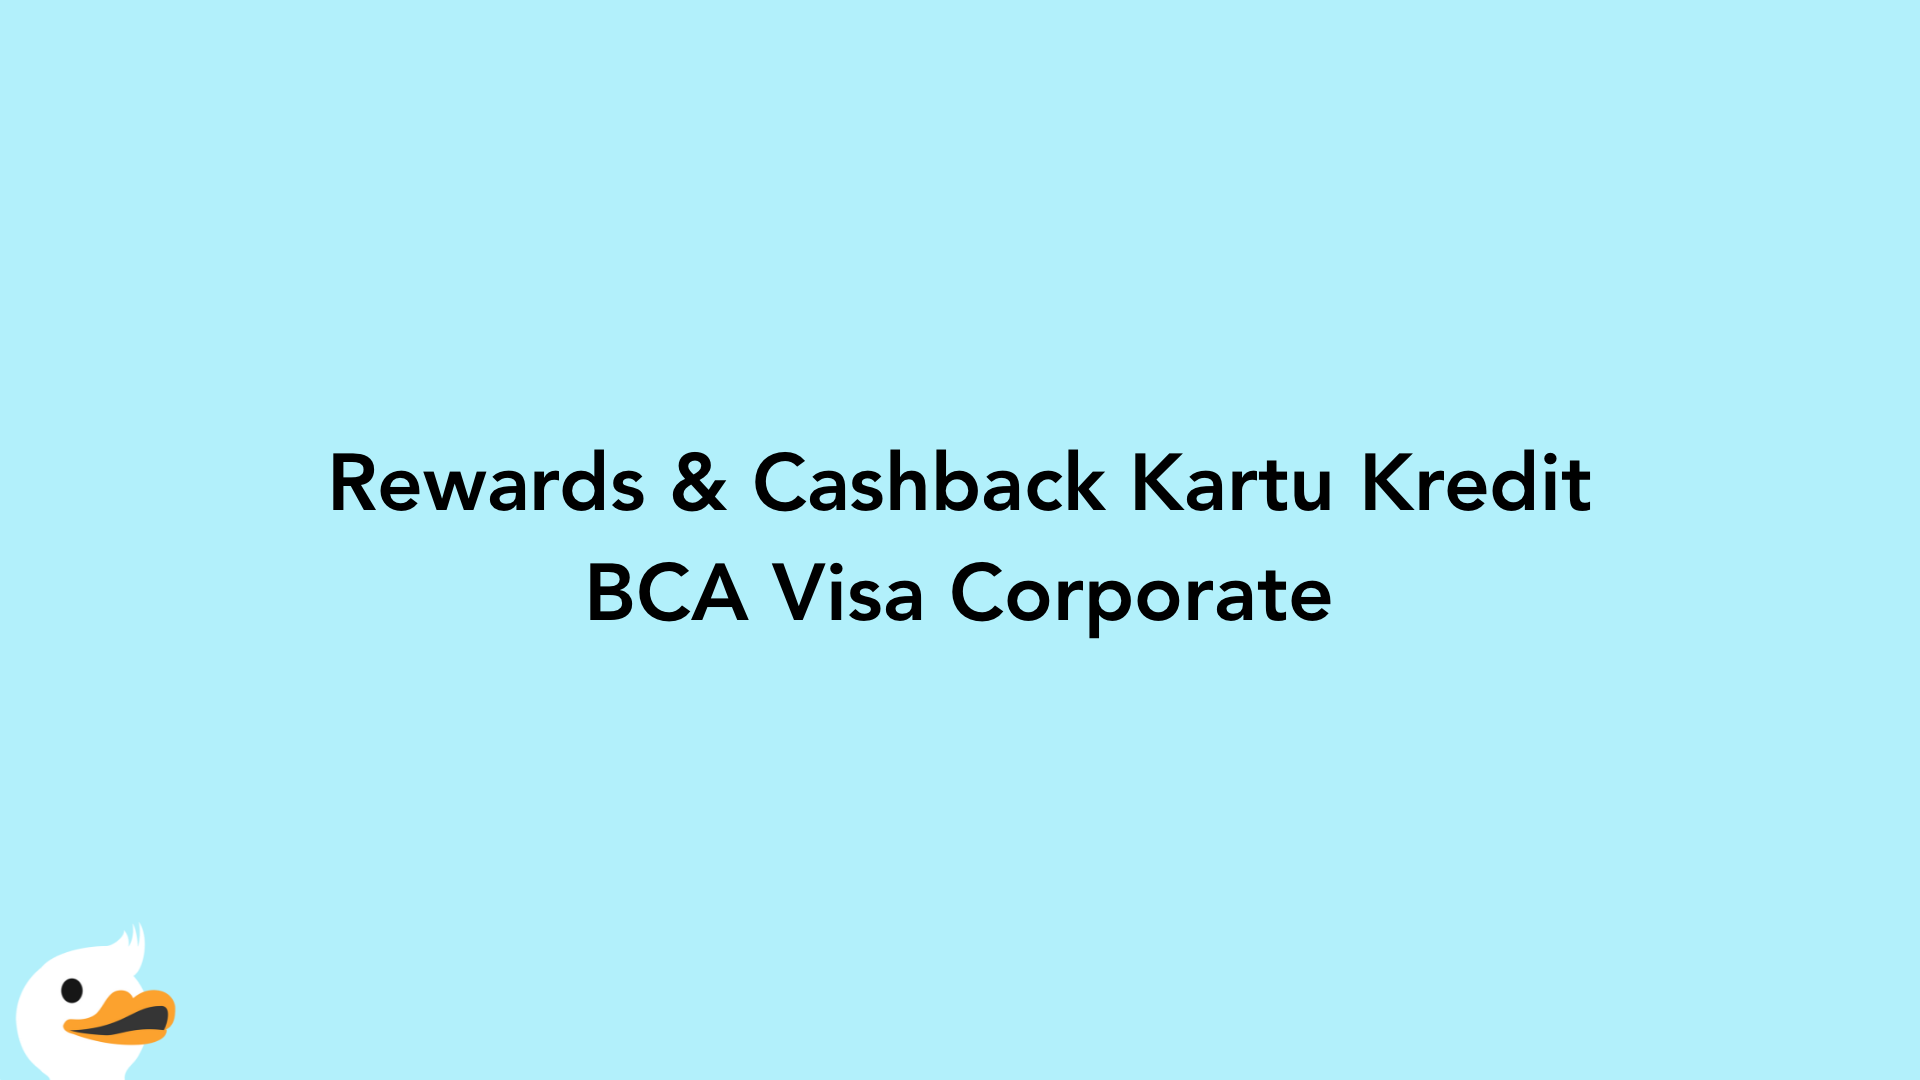 Rewards & Cashback Kartu Kredit BCA Visa Corporate